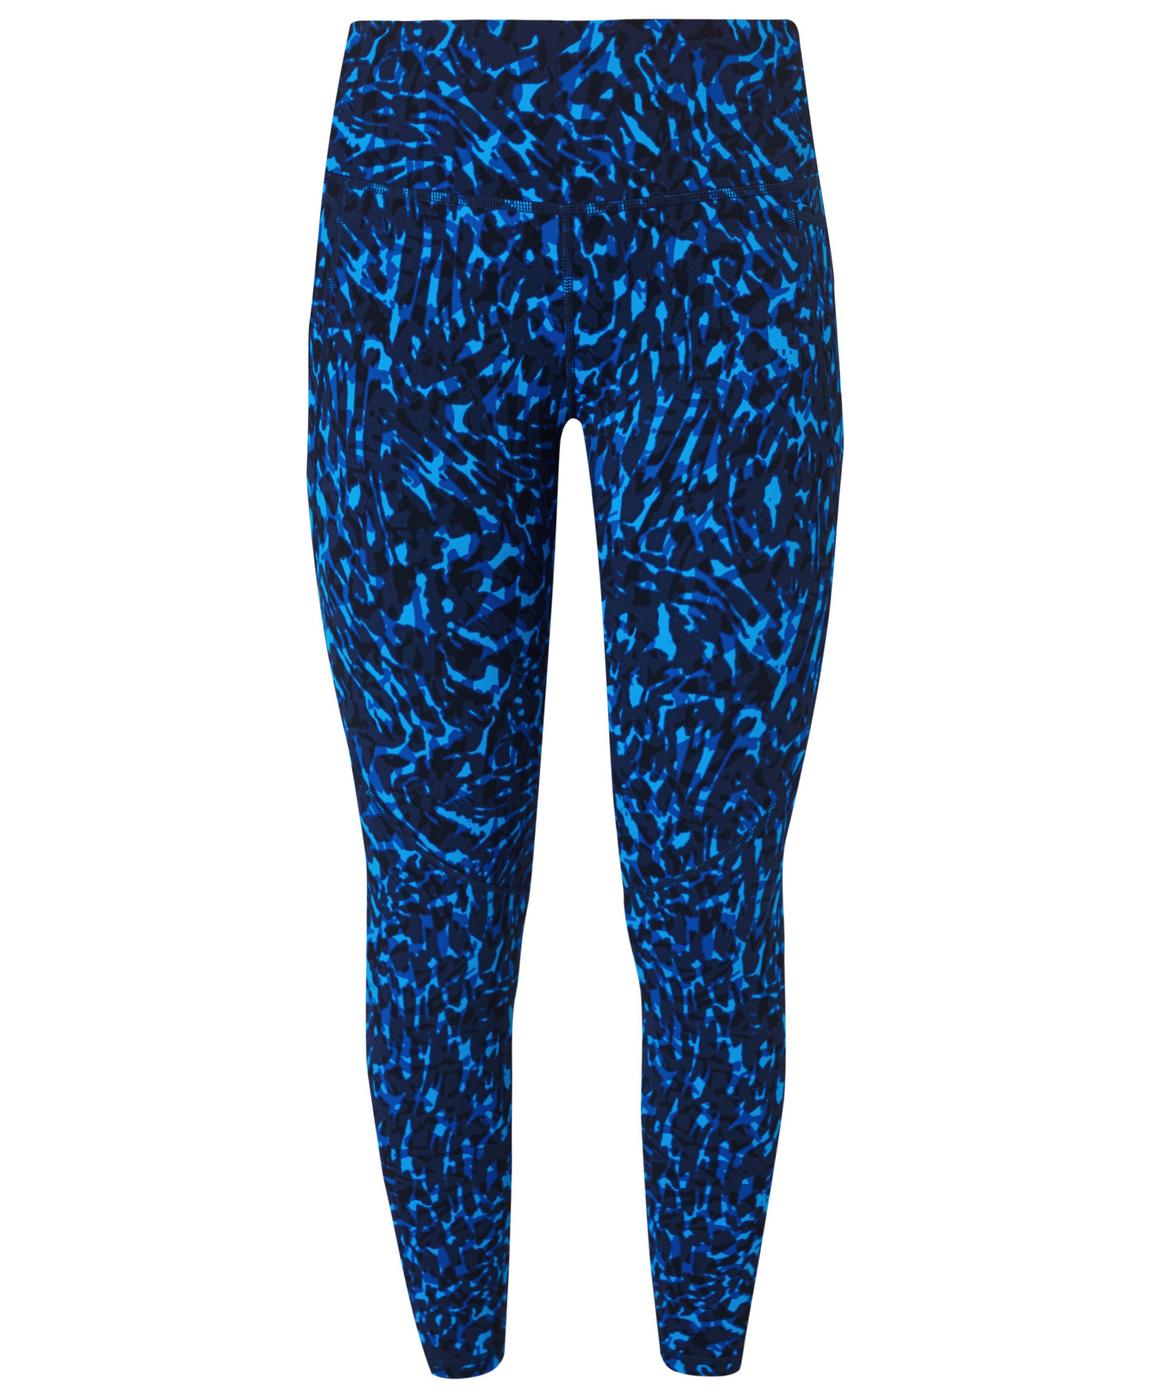 Power Gym Leggings - Blue Animal Swirl Print